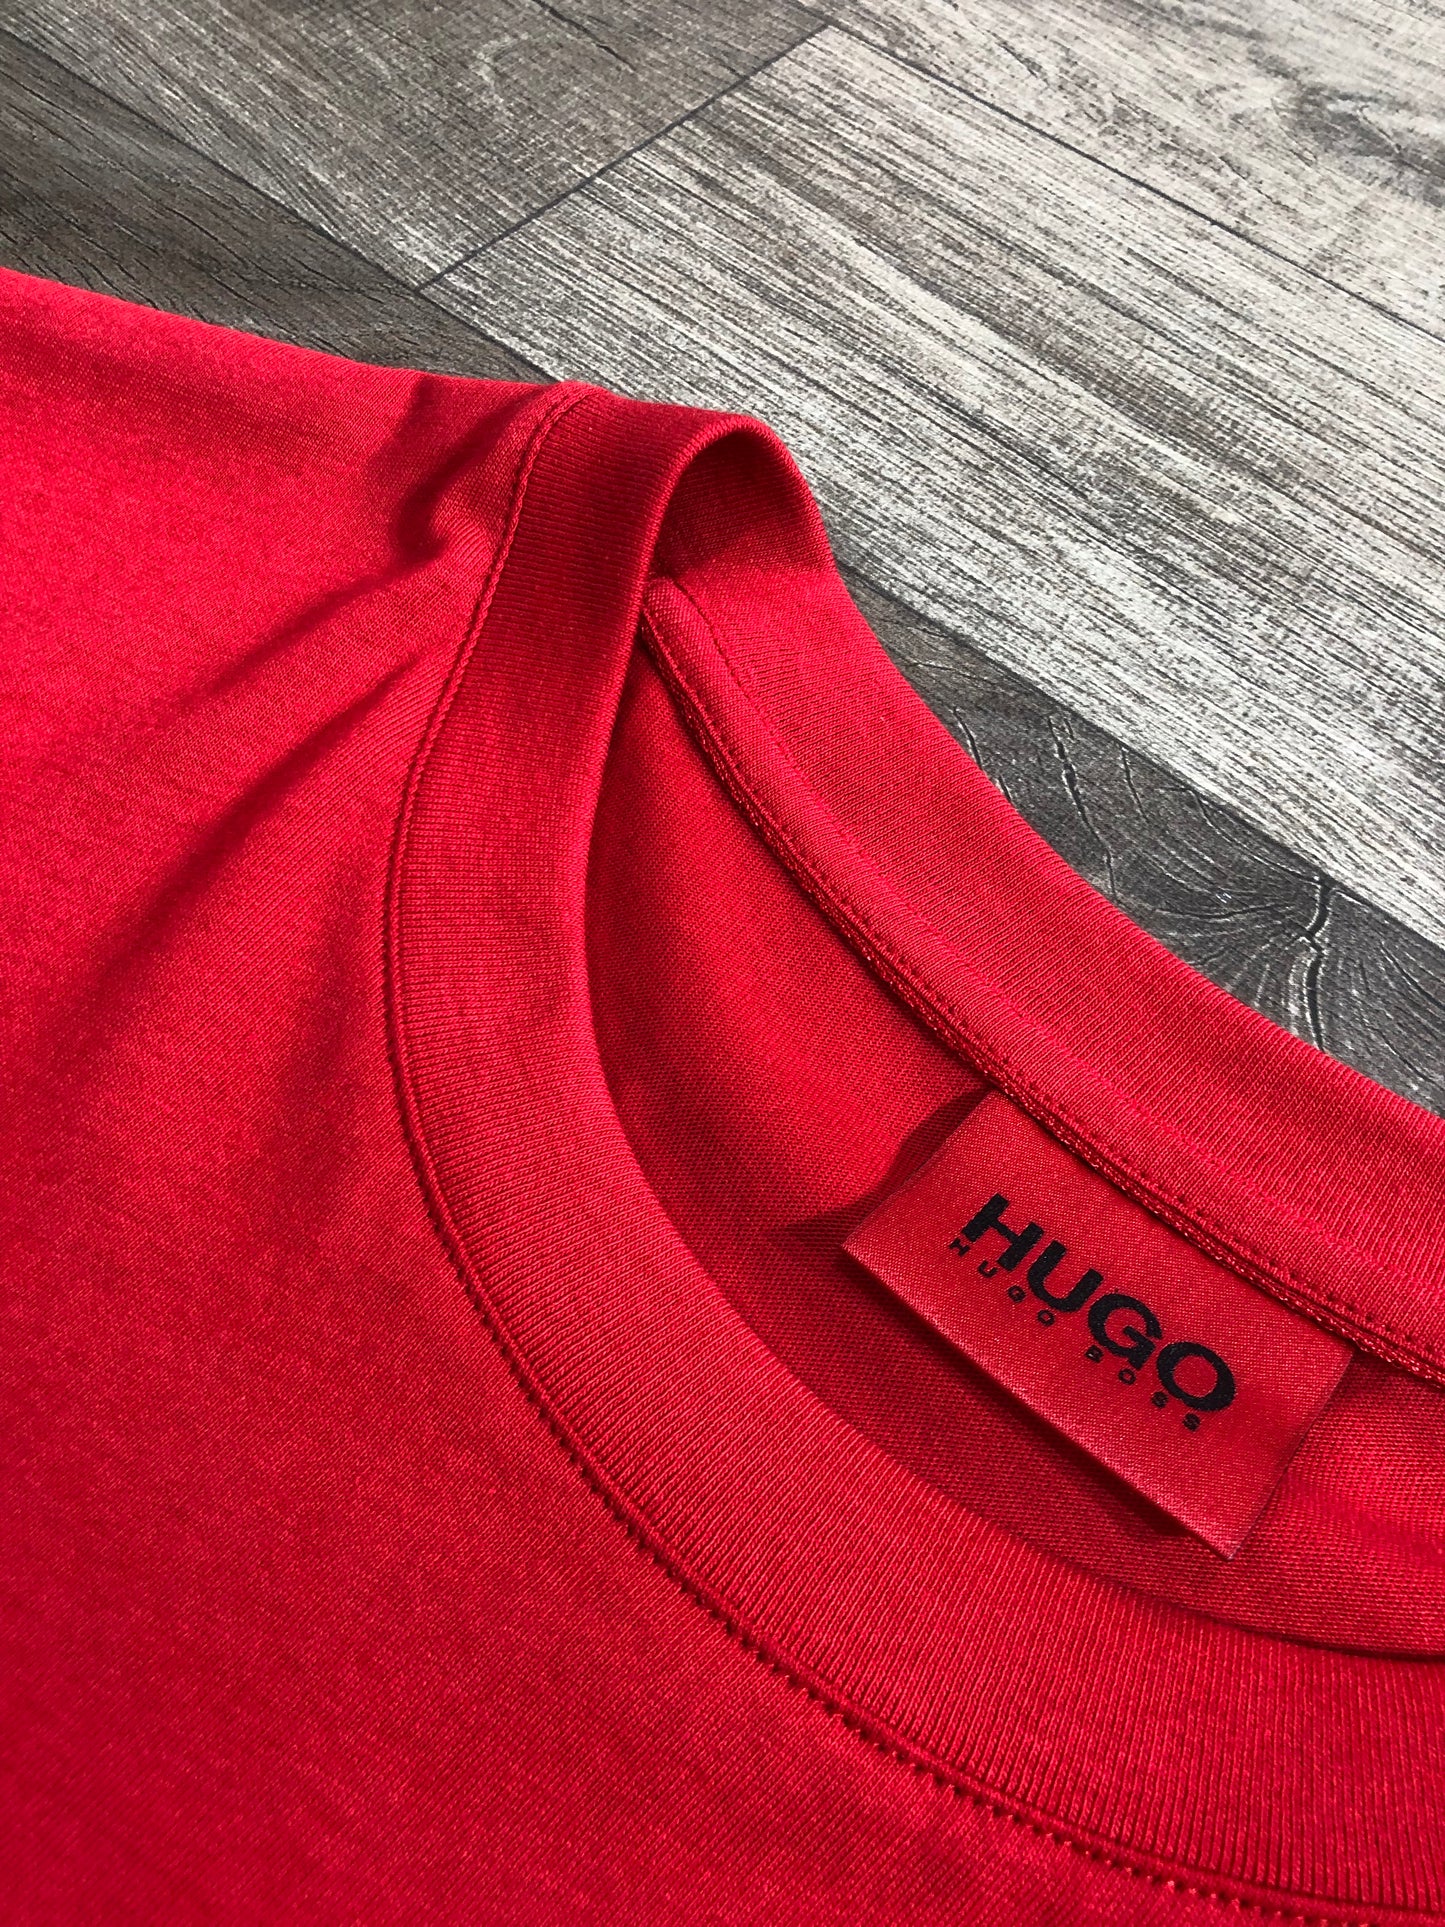 Camiseta Estampado Roja